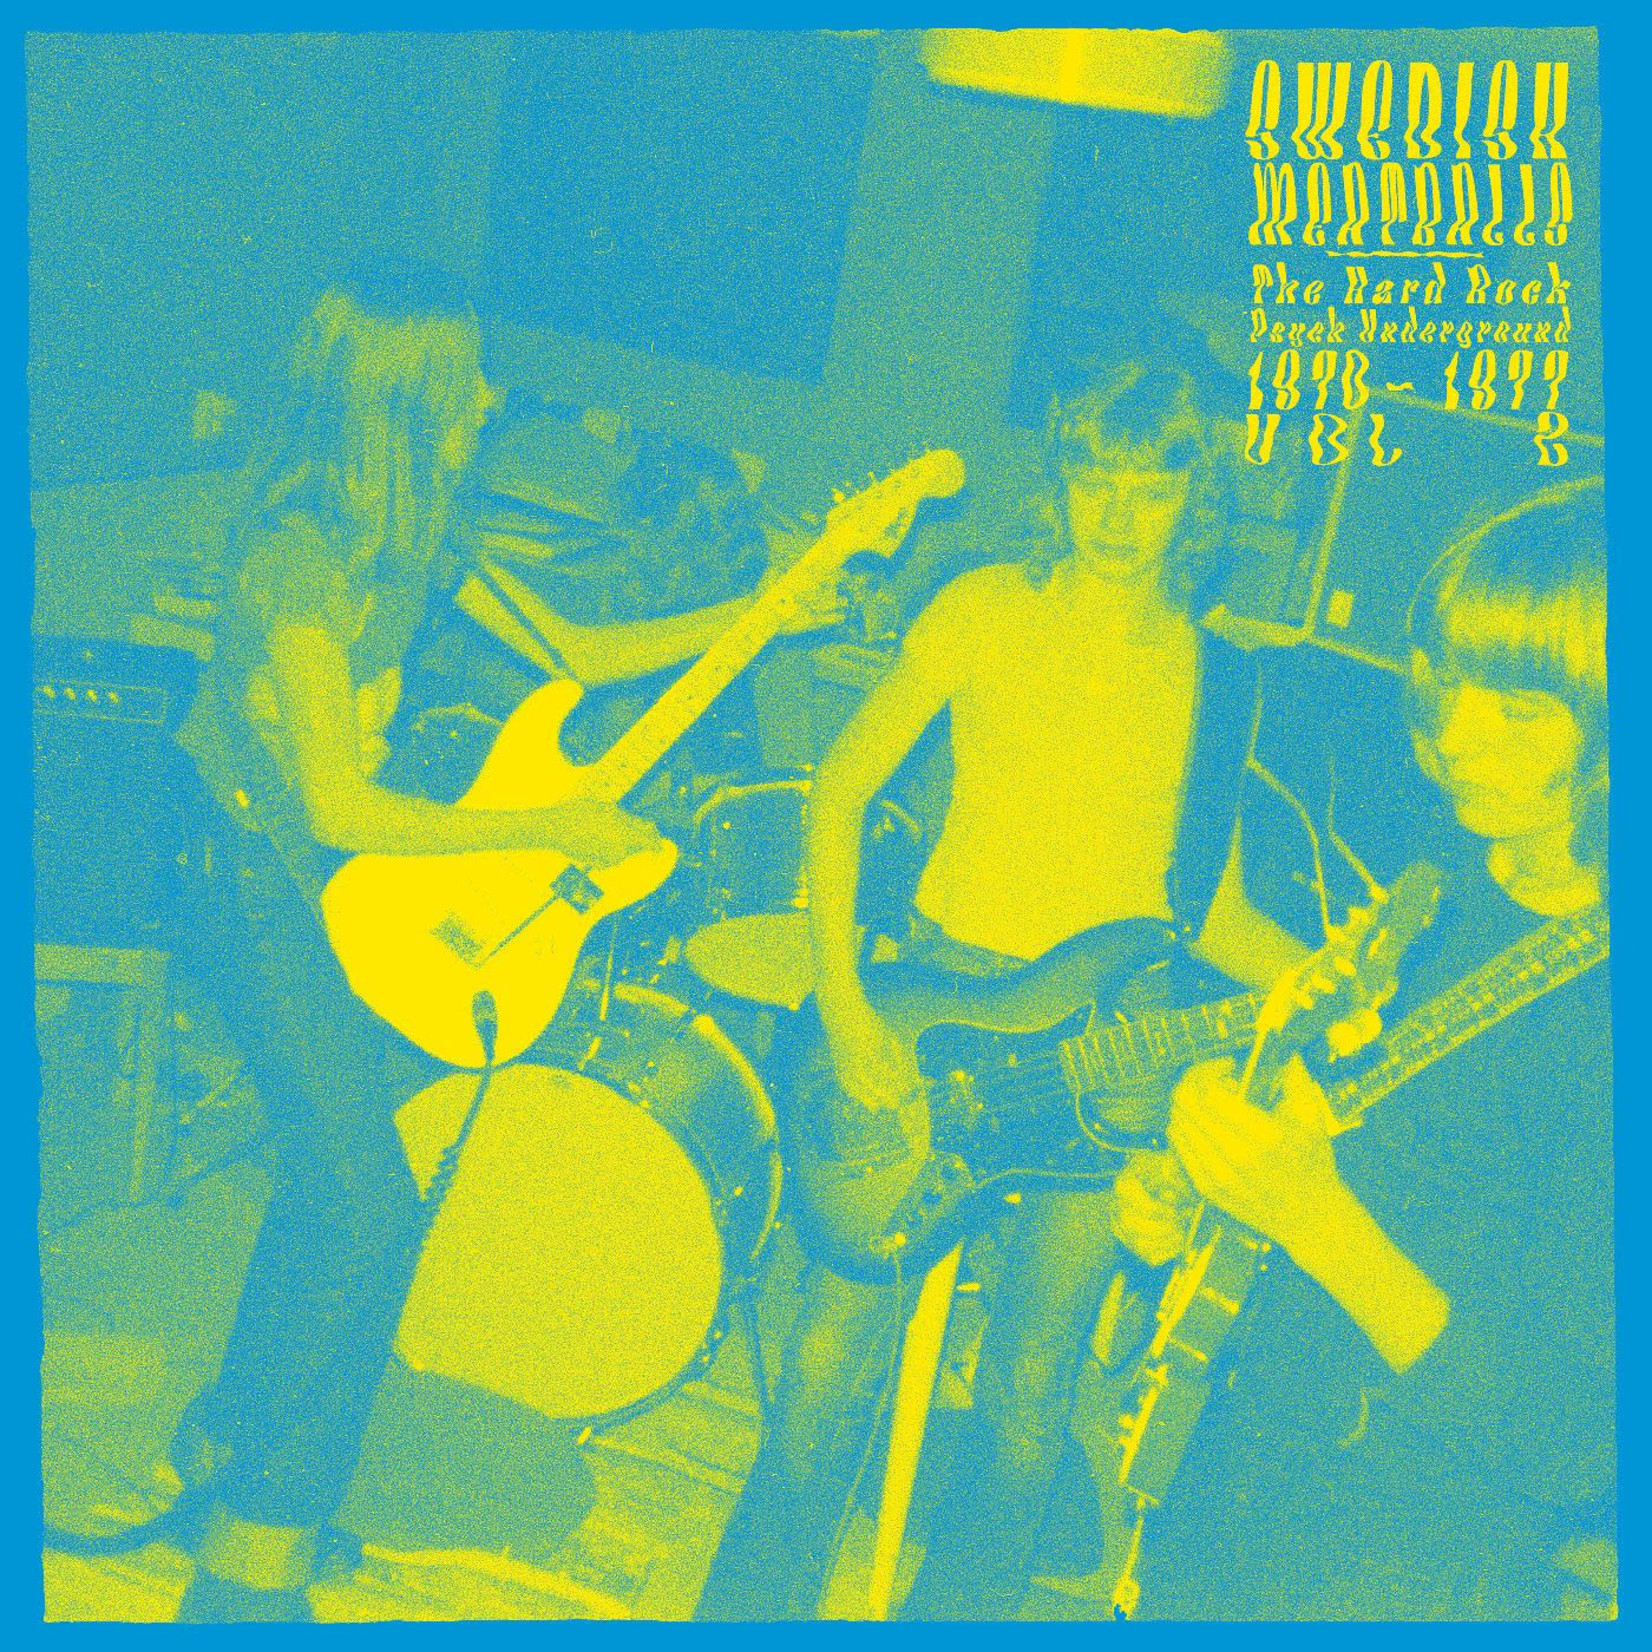 Subliminal Sounds V/A - Swedish Meatballs, Vol 2: The Psychedelic Hard Rock Underground 1970-1977 (LP)